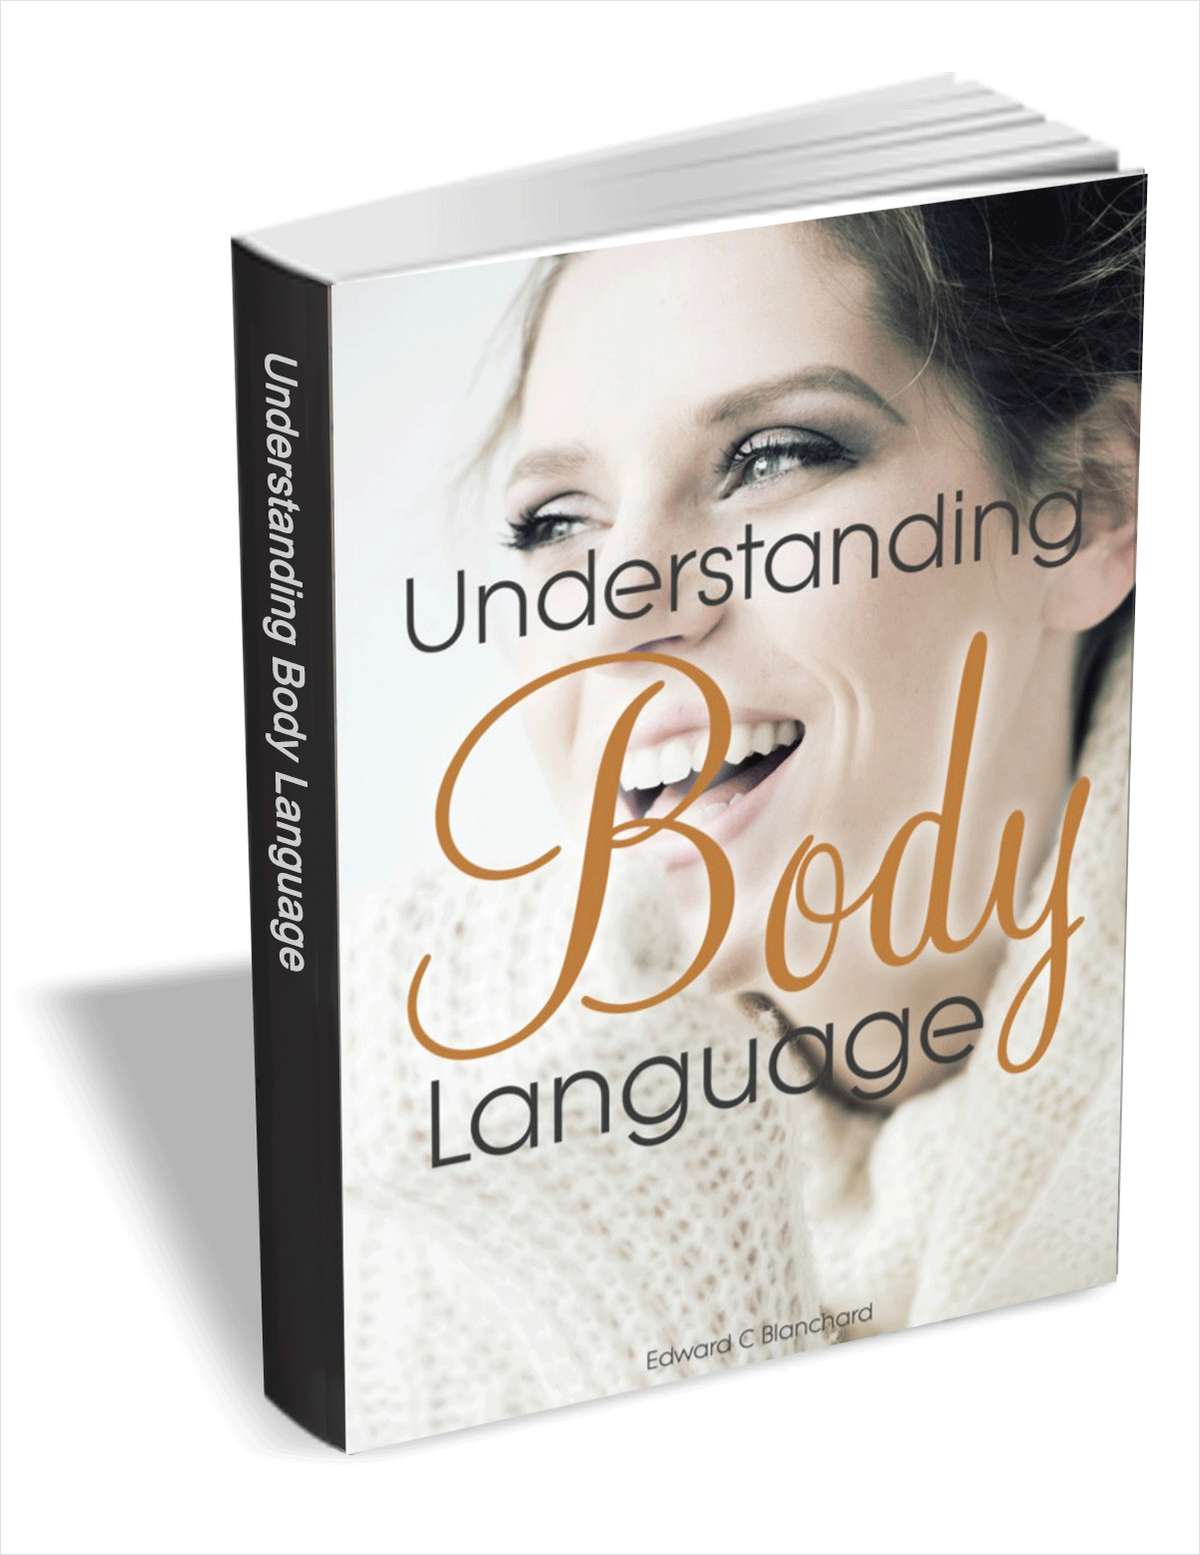 Body Language learnerscoach